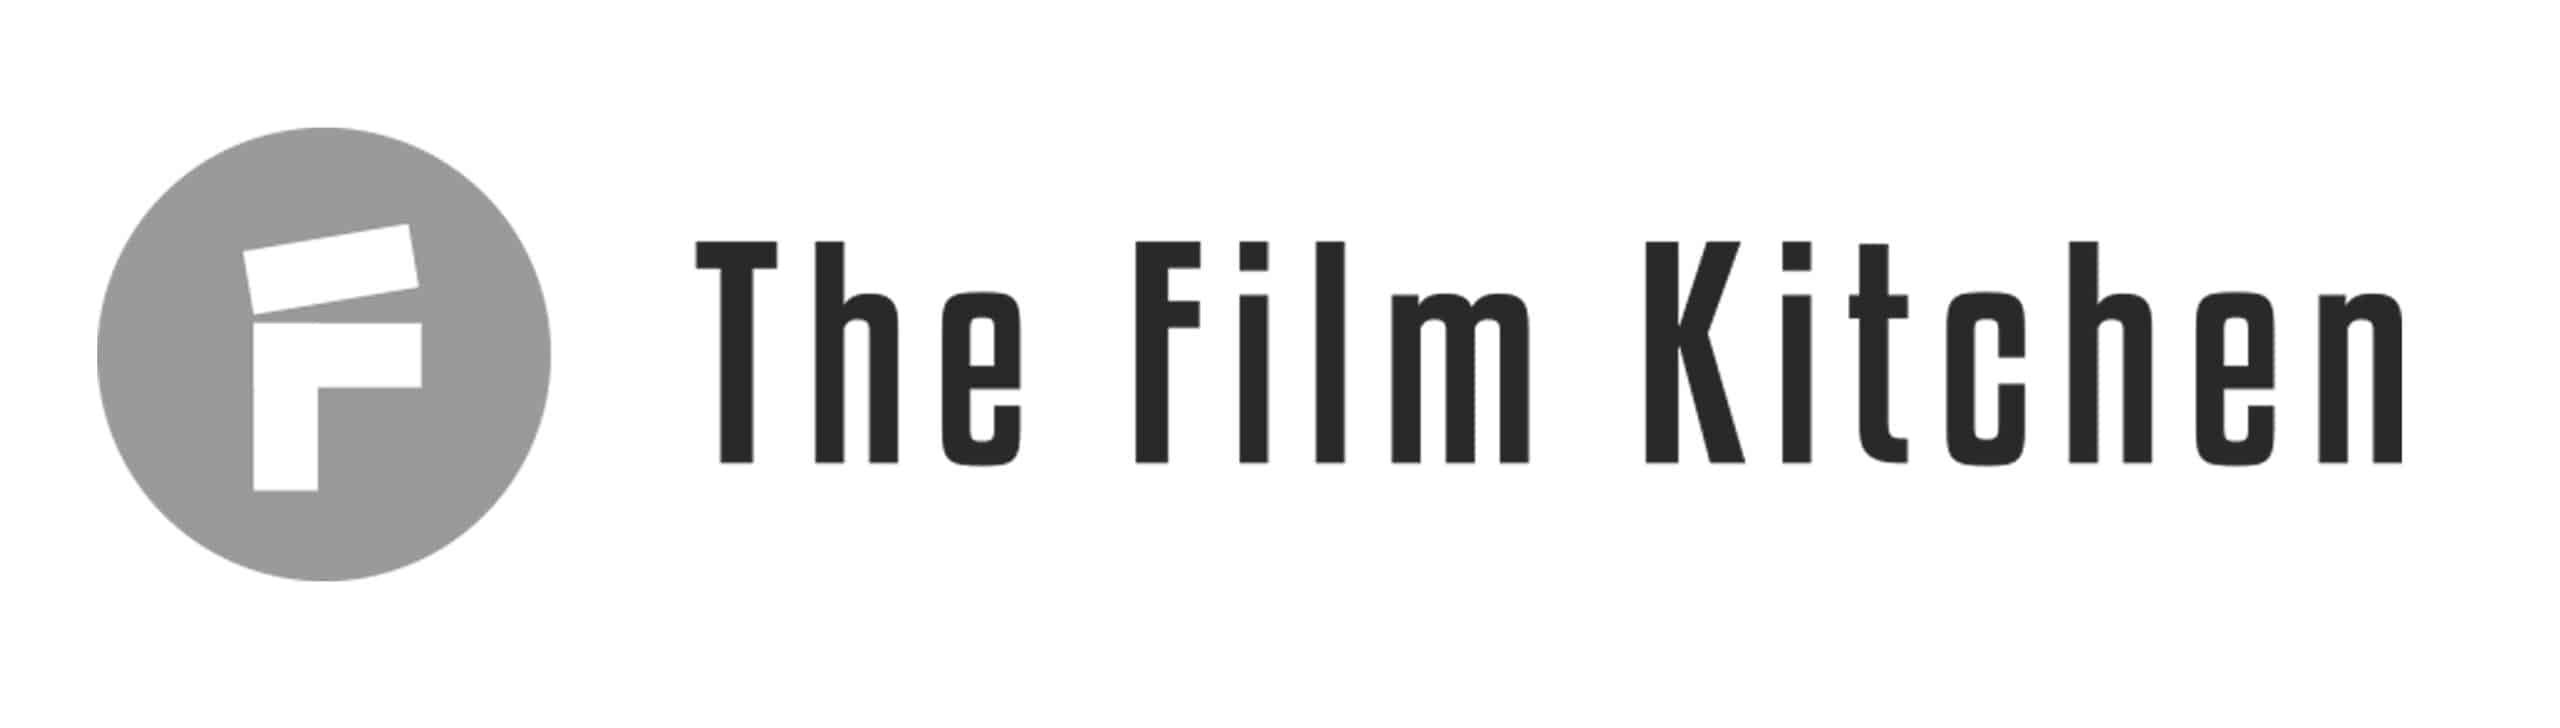 The-Film-Kitchen-logo